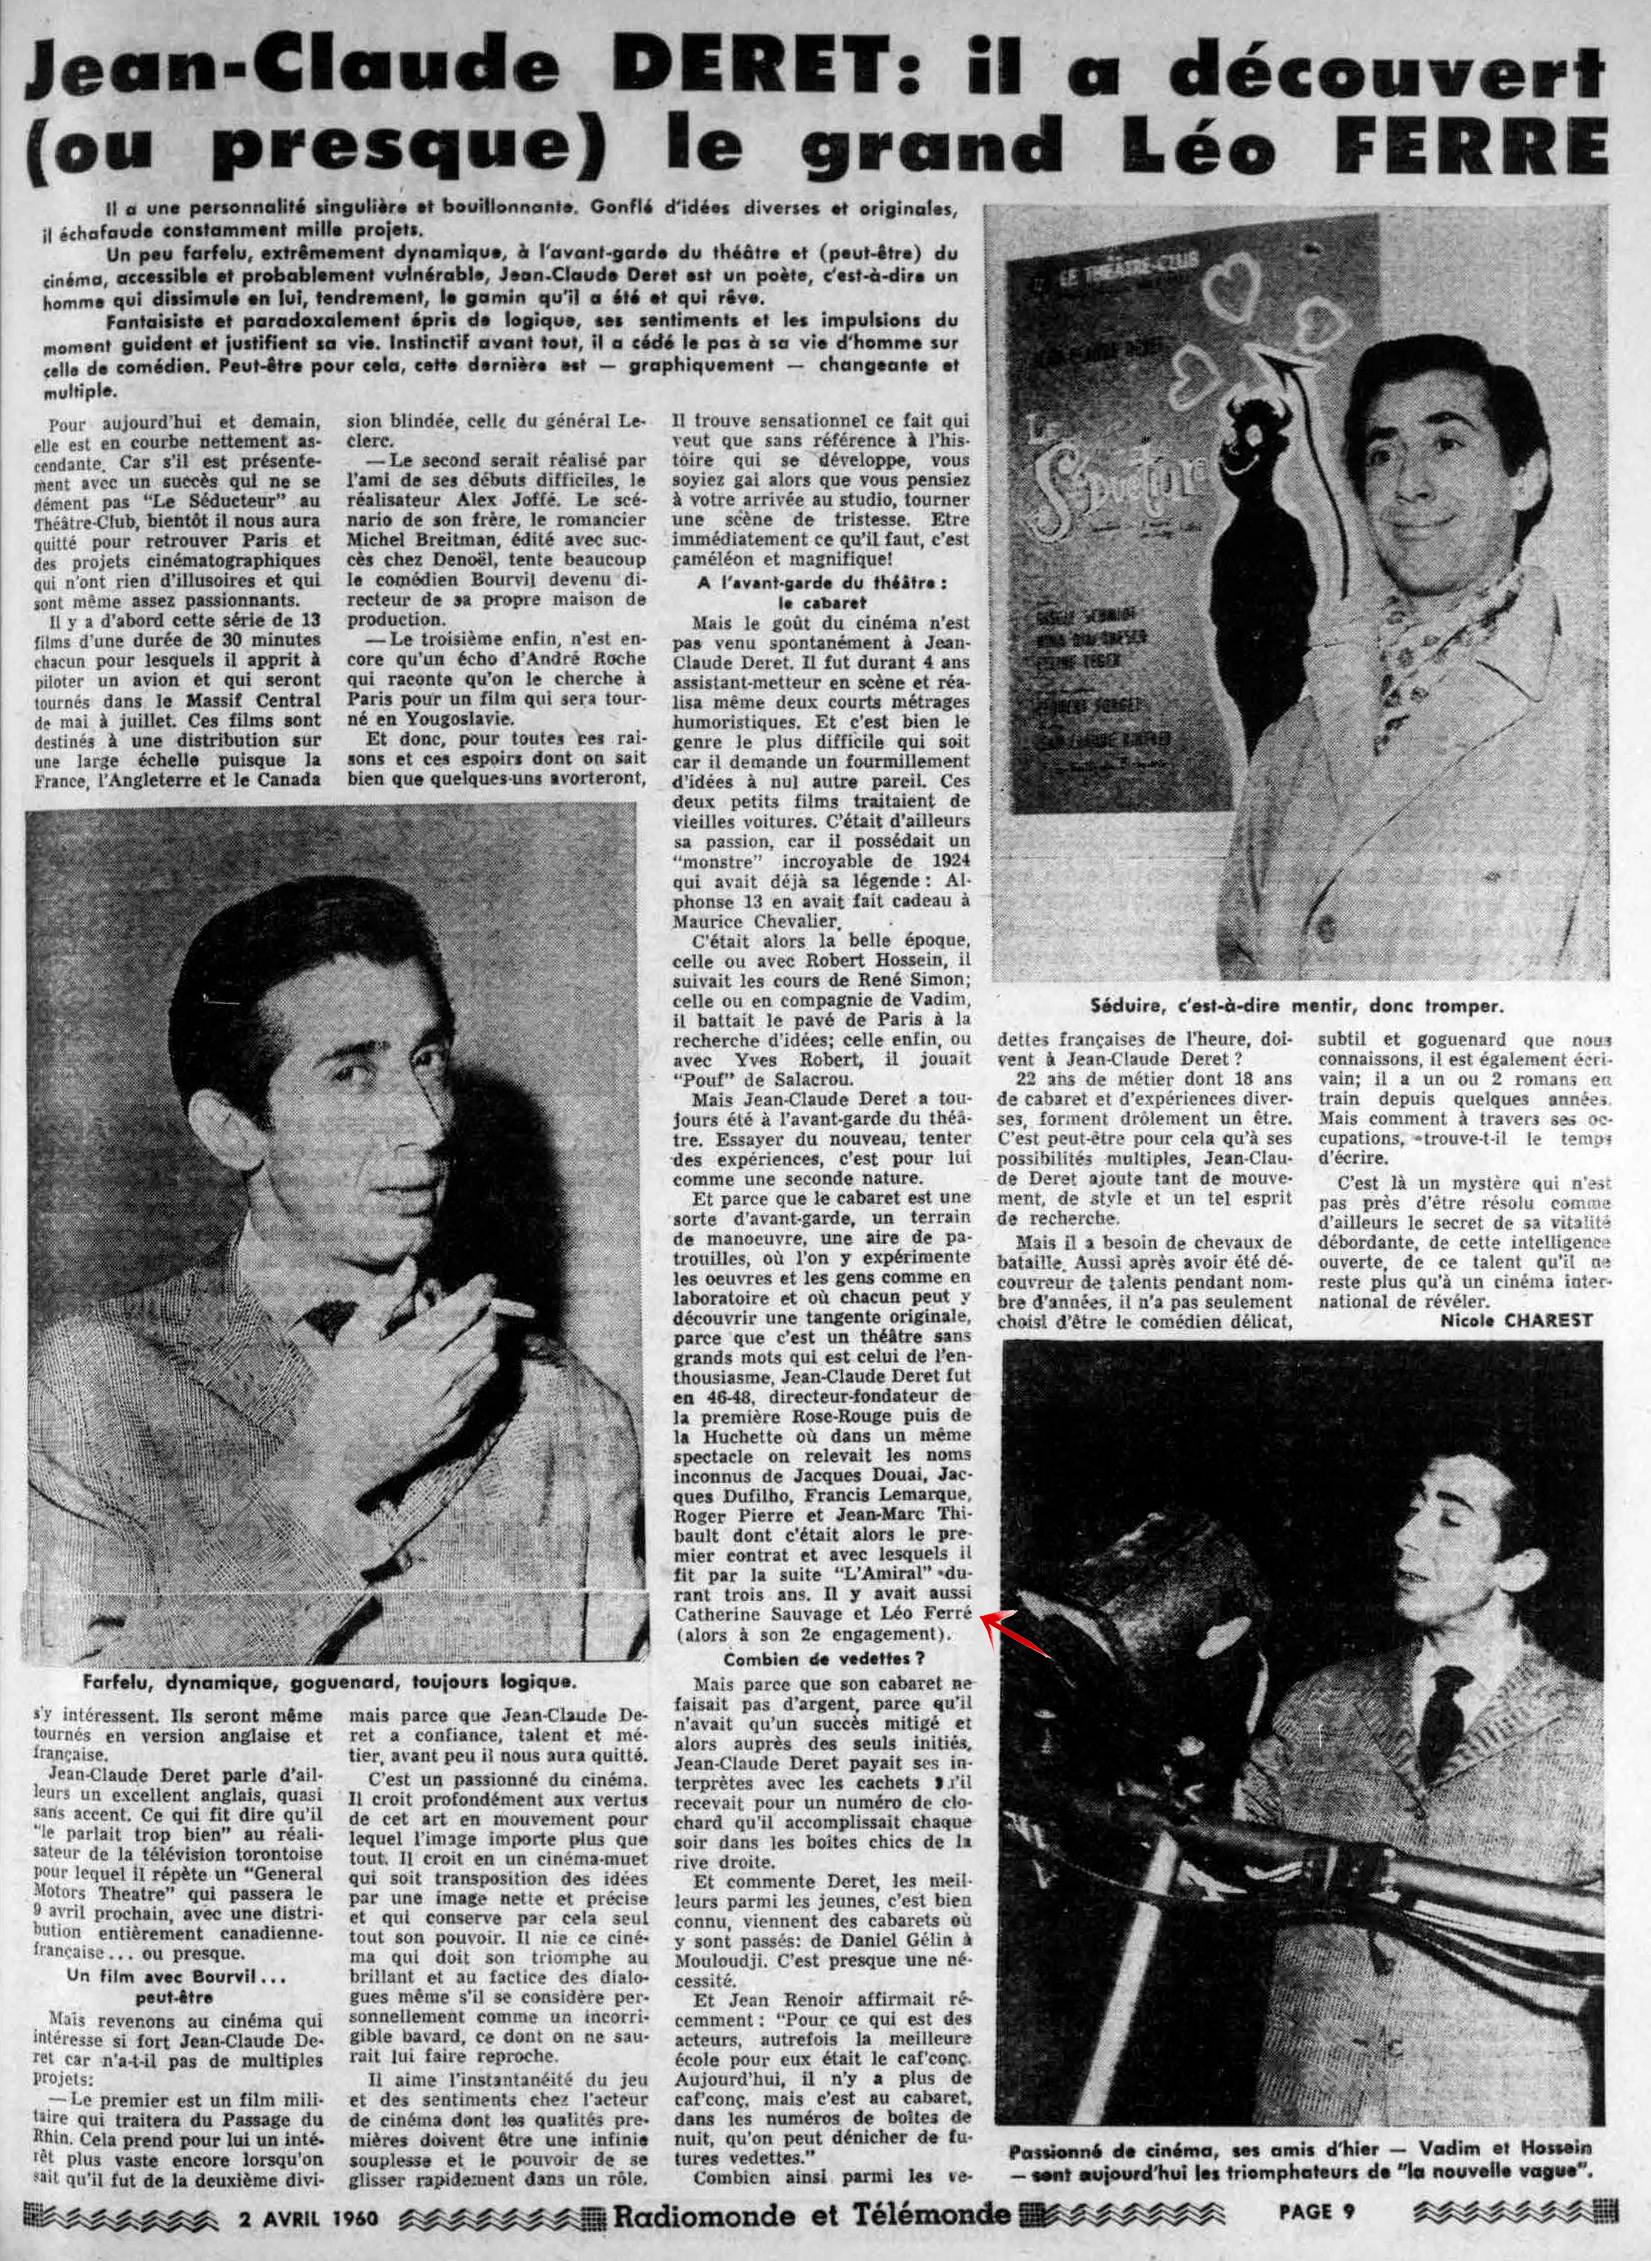 Léo Ferré - Radiomonde et télémonde, 1952-1960, samedi 2 avril 1960